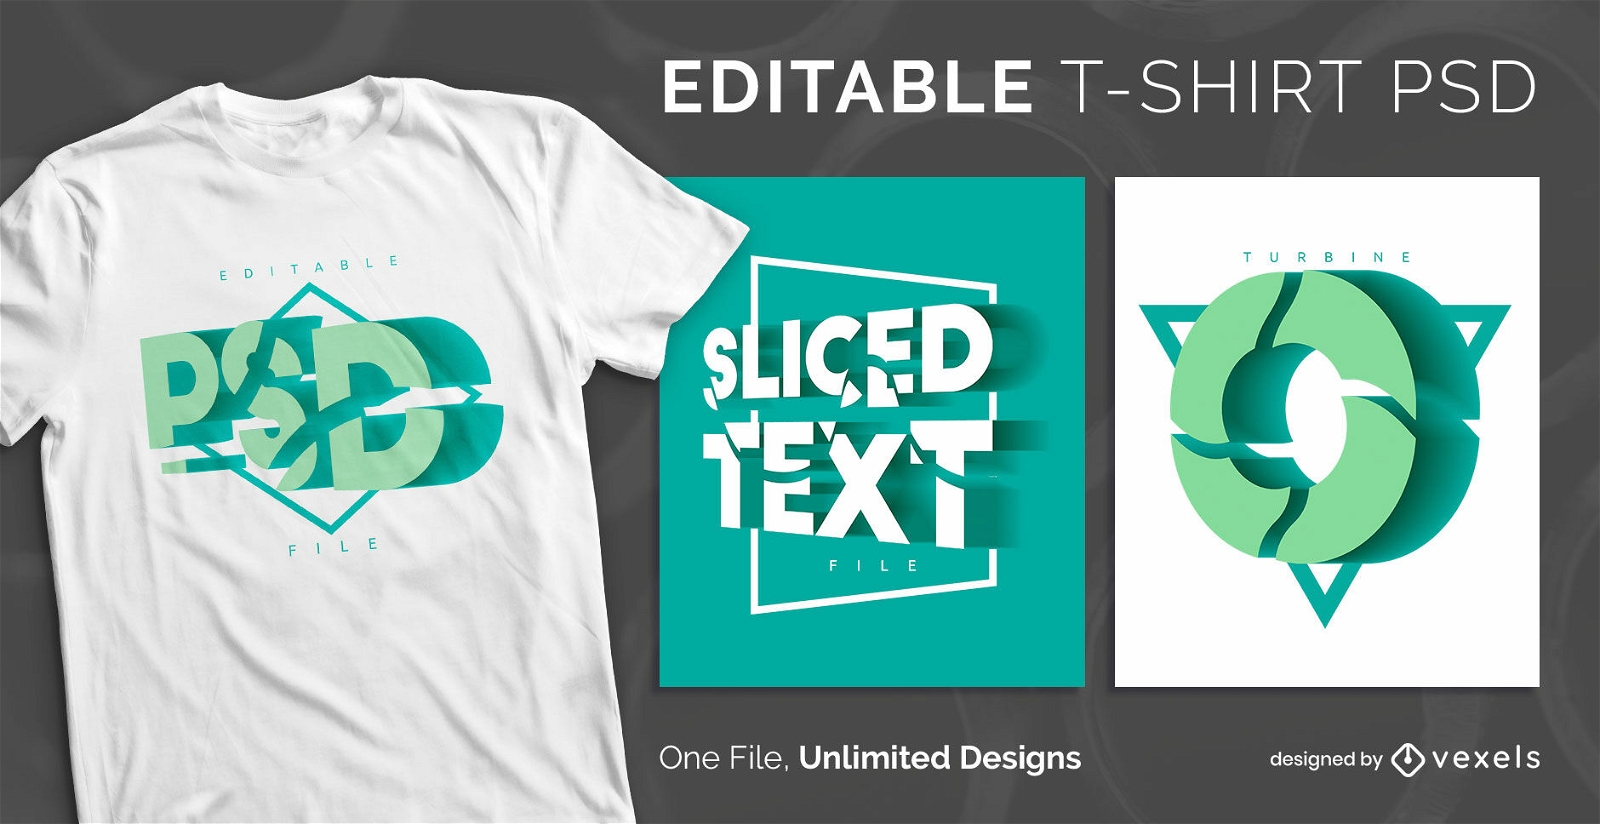 3D sliced texts scalable t-shirt psd